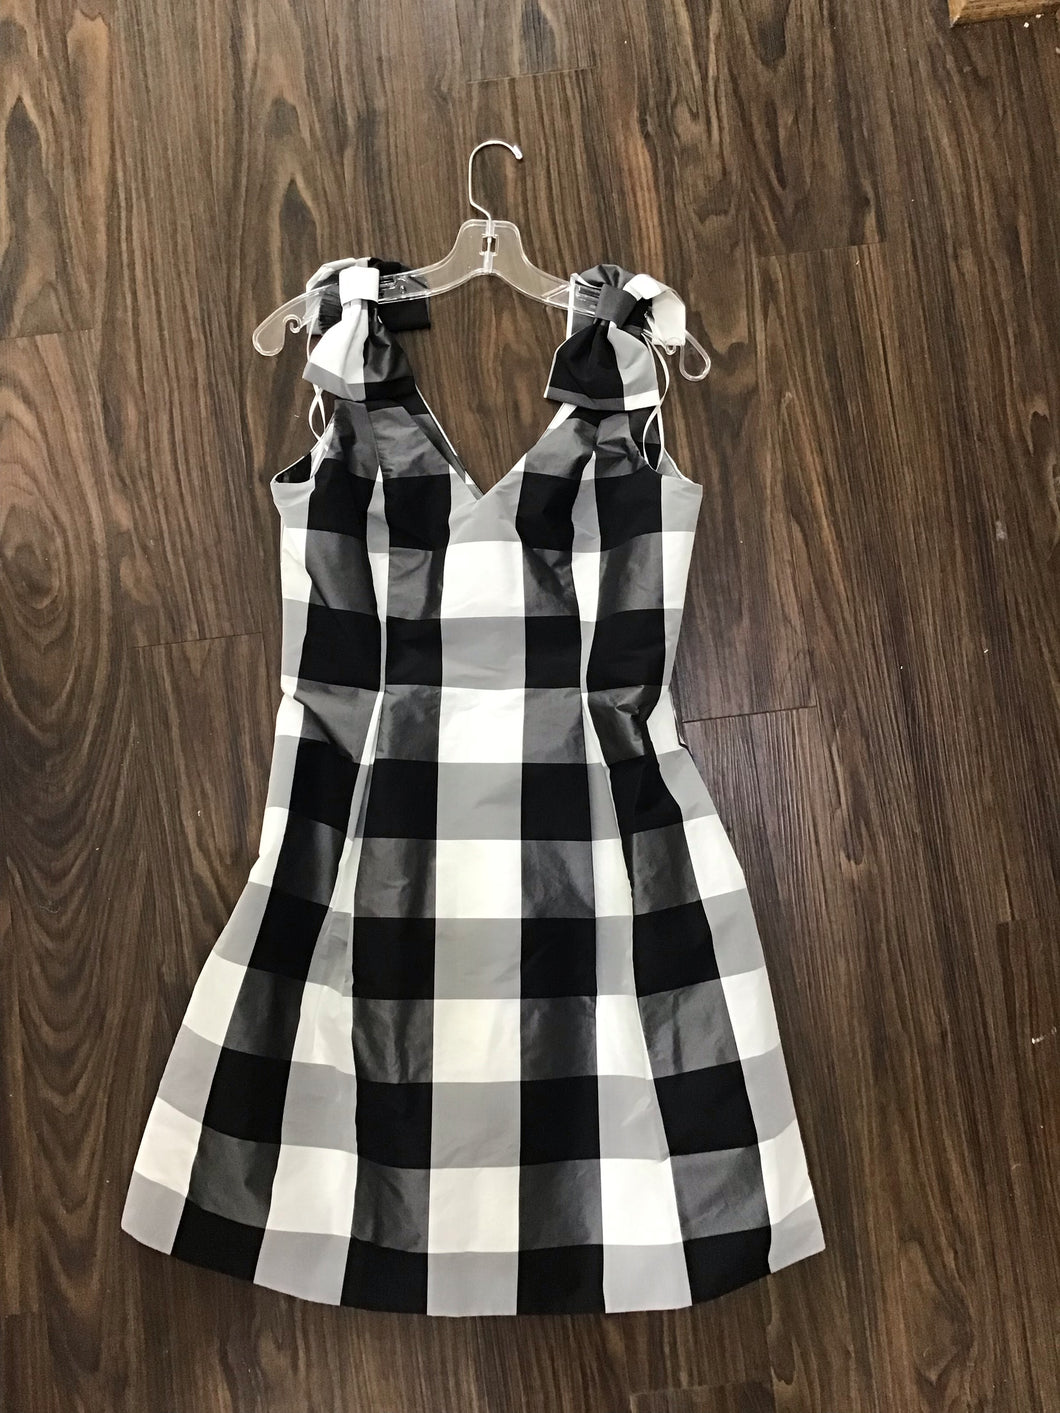 Sleeveless Bow Checkered Dress in Black/White by Tyler Böe